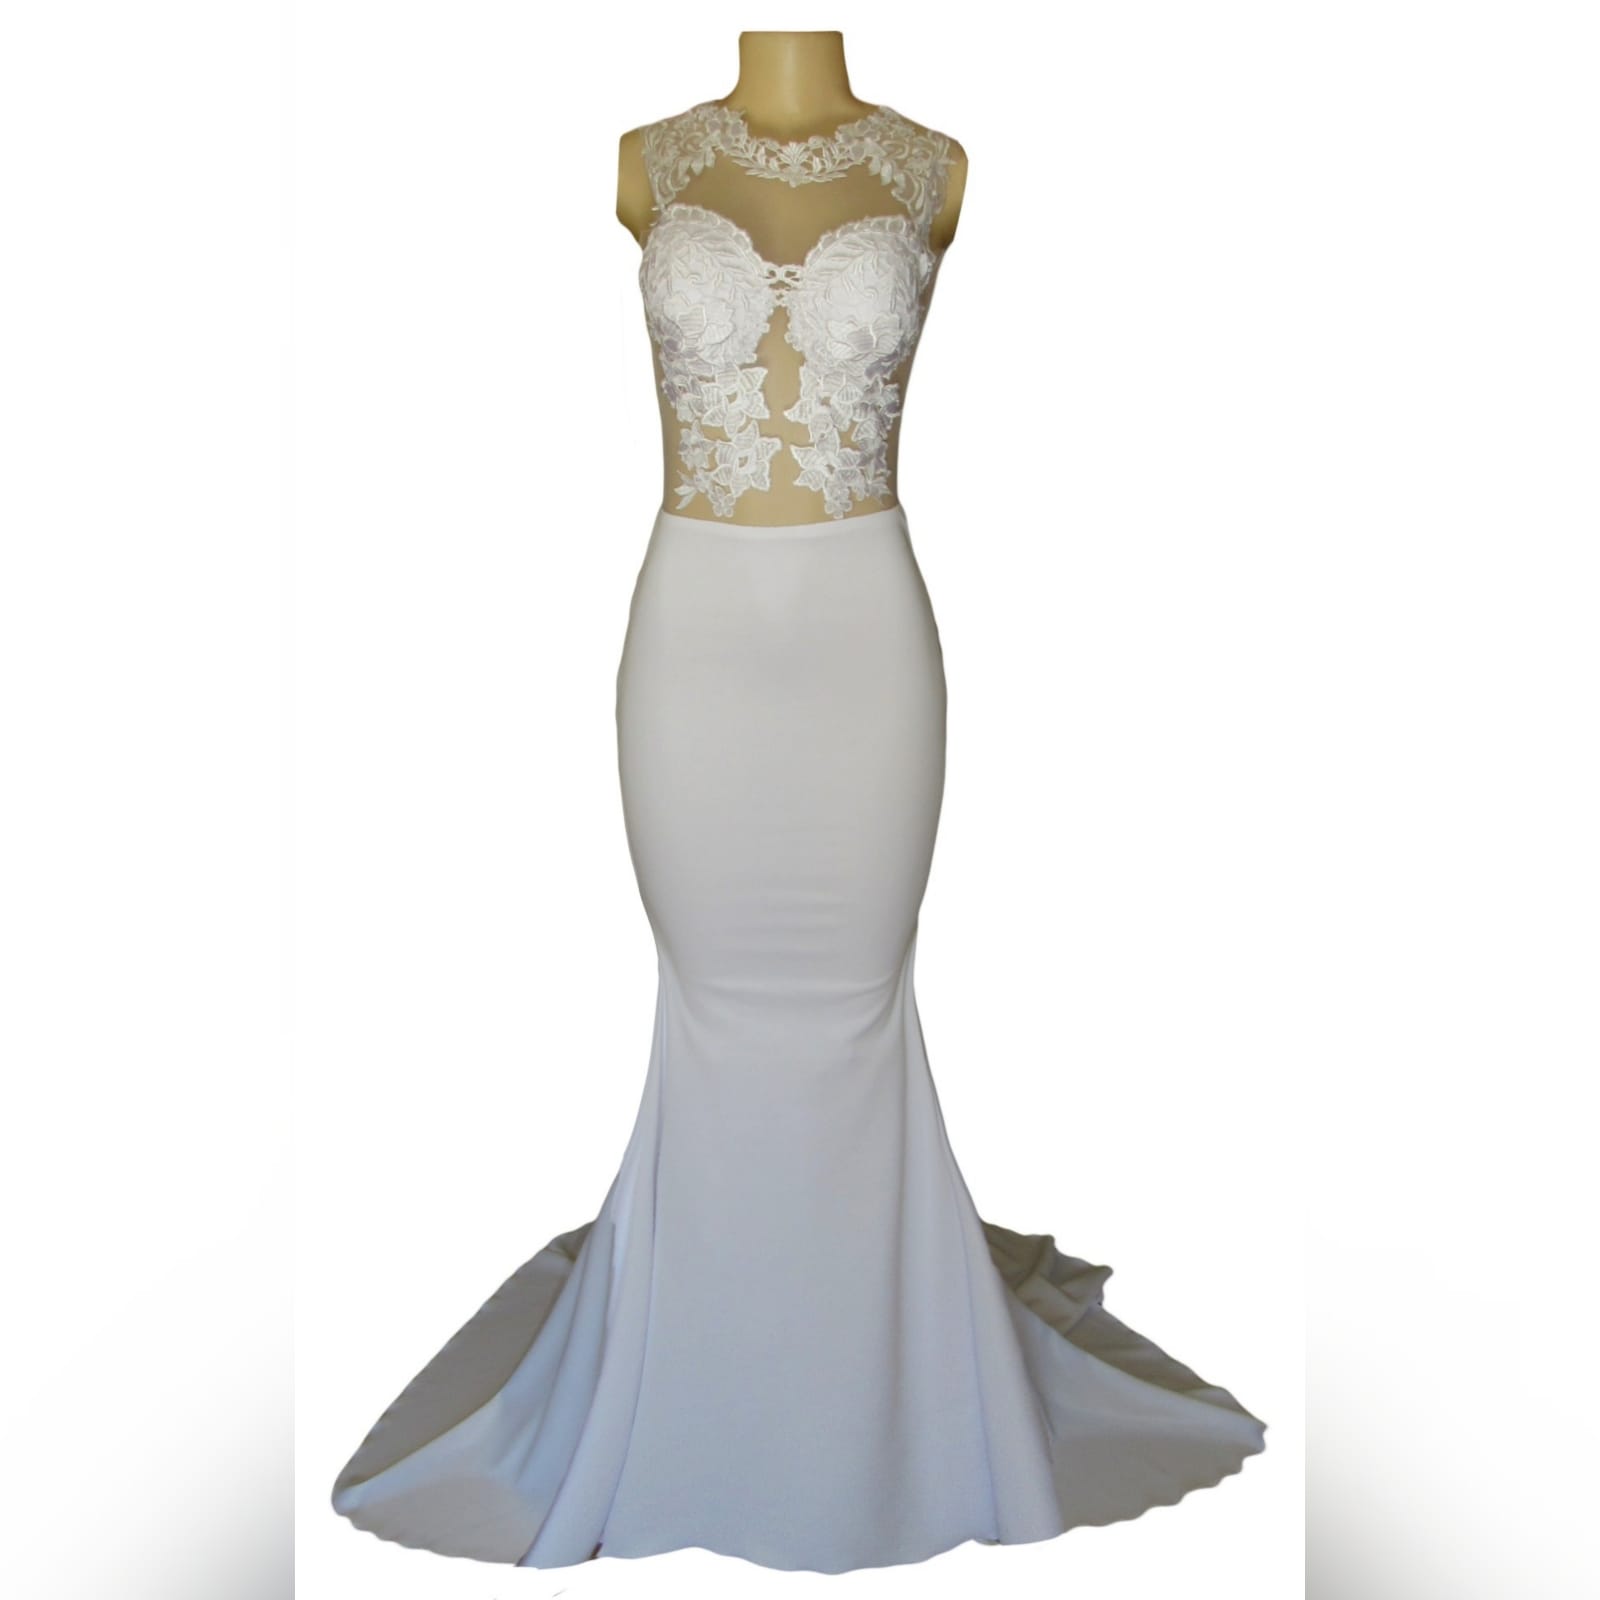 White tight soft mermaid wedding dress 5 white tight soft mermaid wedding dress with an illusion lace bodice and train